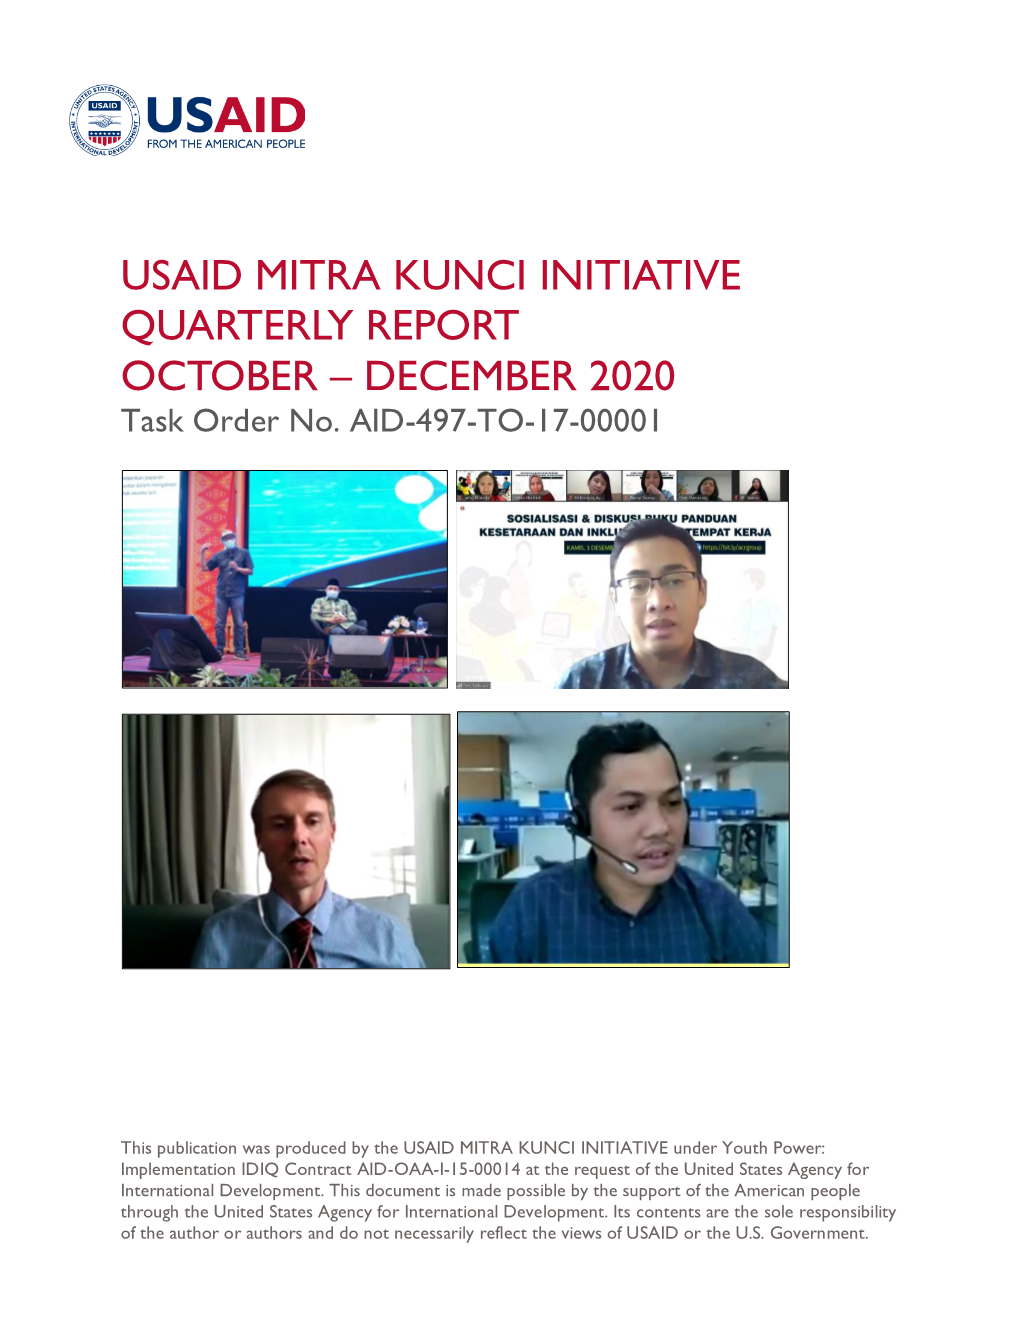 USAID MITRA KUNCI INITIATIVE QUARTERLY REPORT OCTOBER – DECEMBER 2020 Task Order No